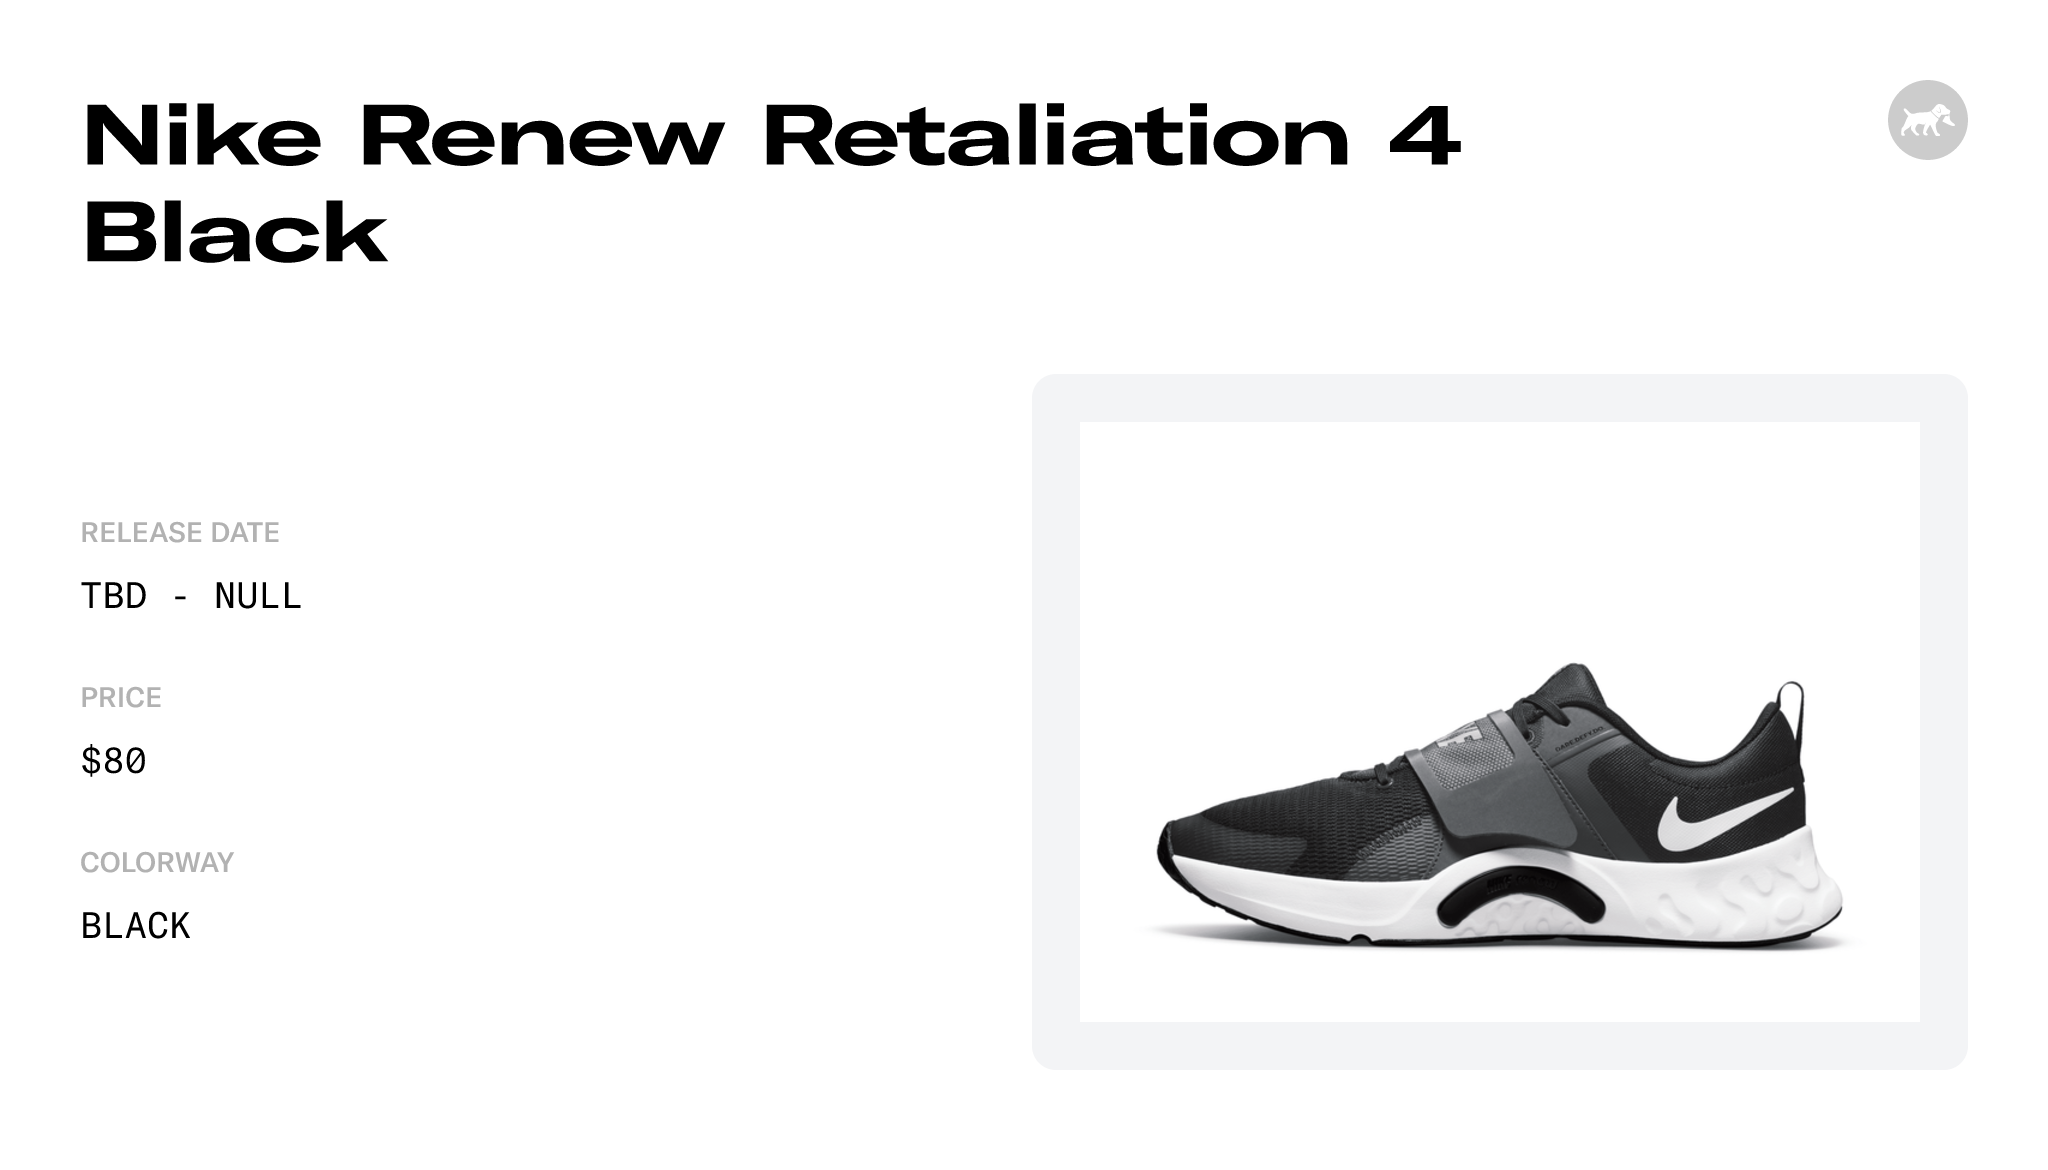 Nike Renew Retaliation 4 Black - DH0606-001 Raffles and Release Date